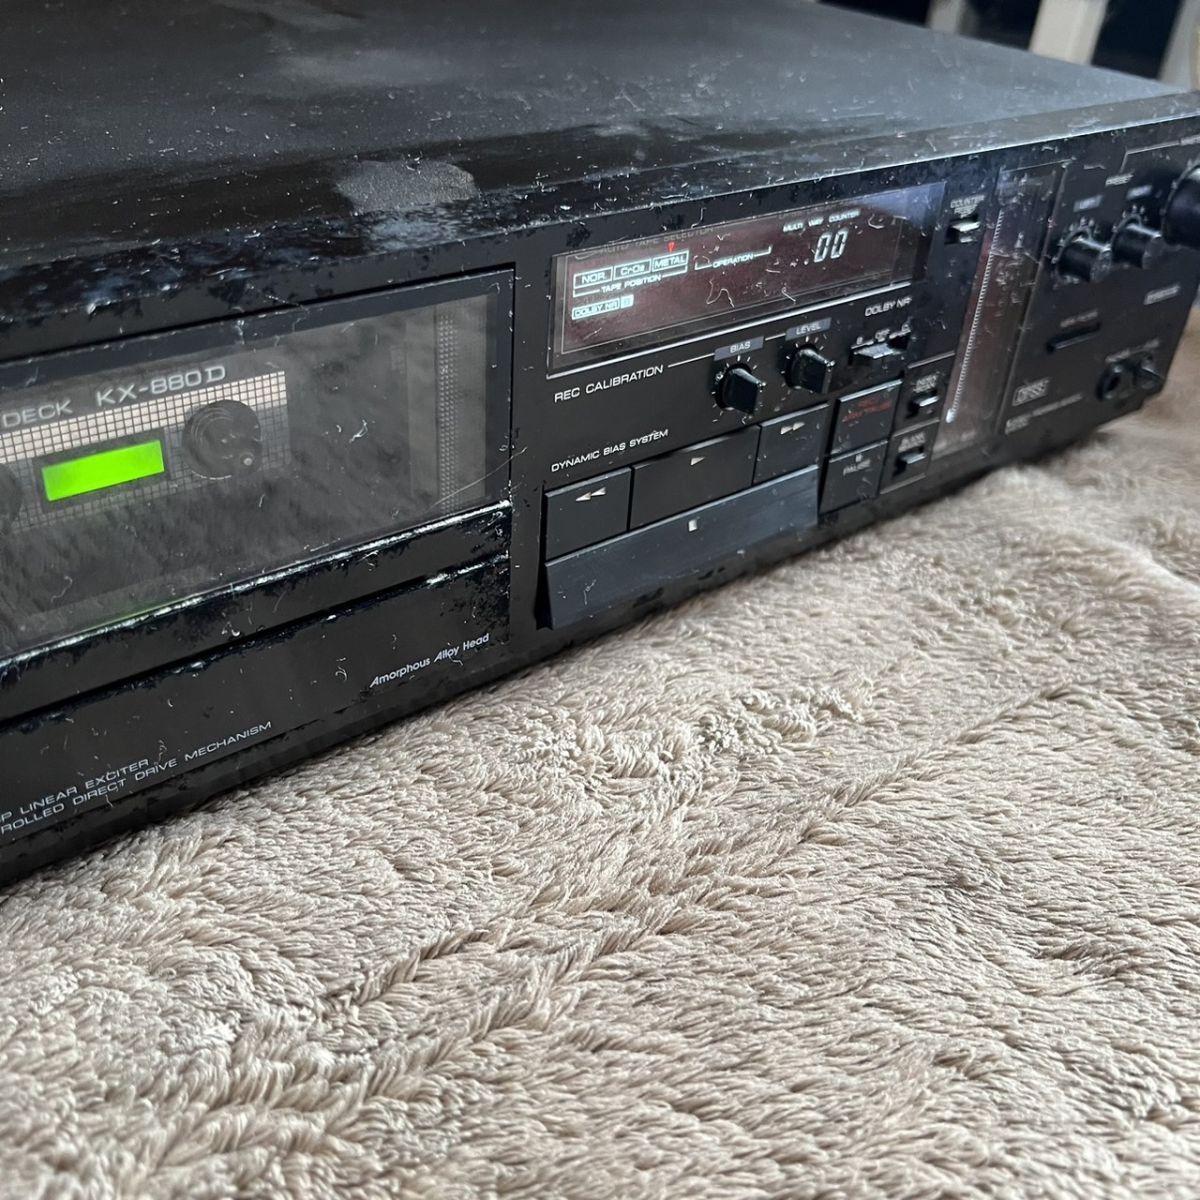  rare KENWOOD Kenwood KX-880D stereo cassette deck audio 2 head single sound equipment electrification OK